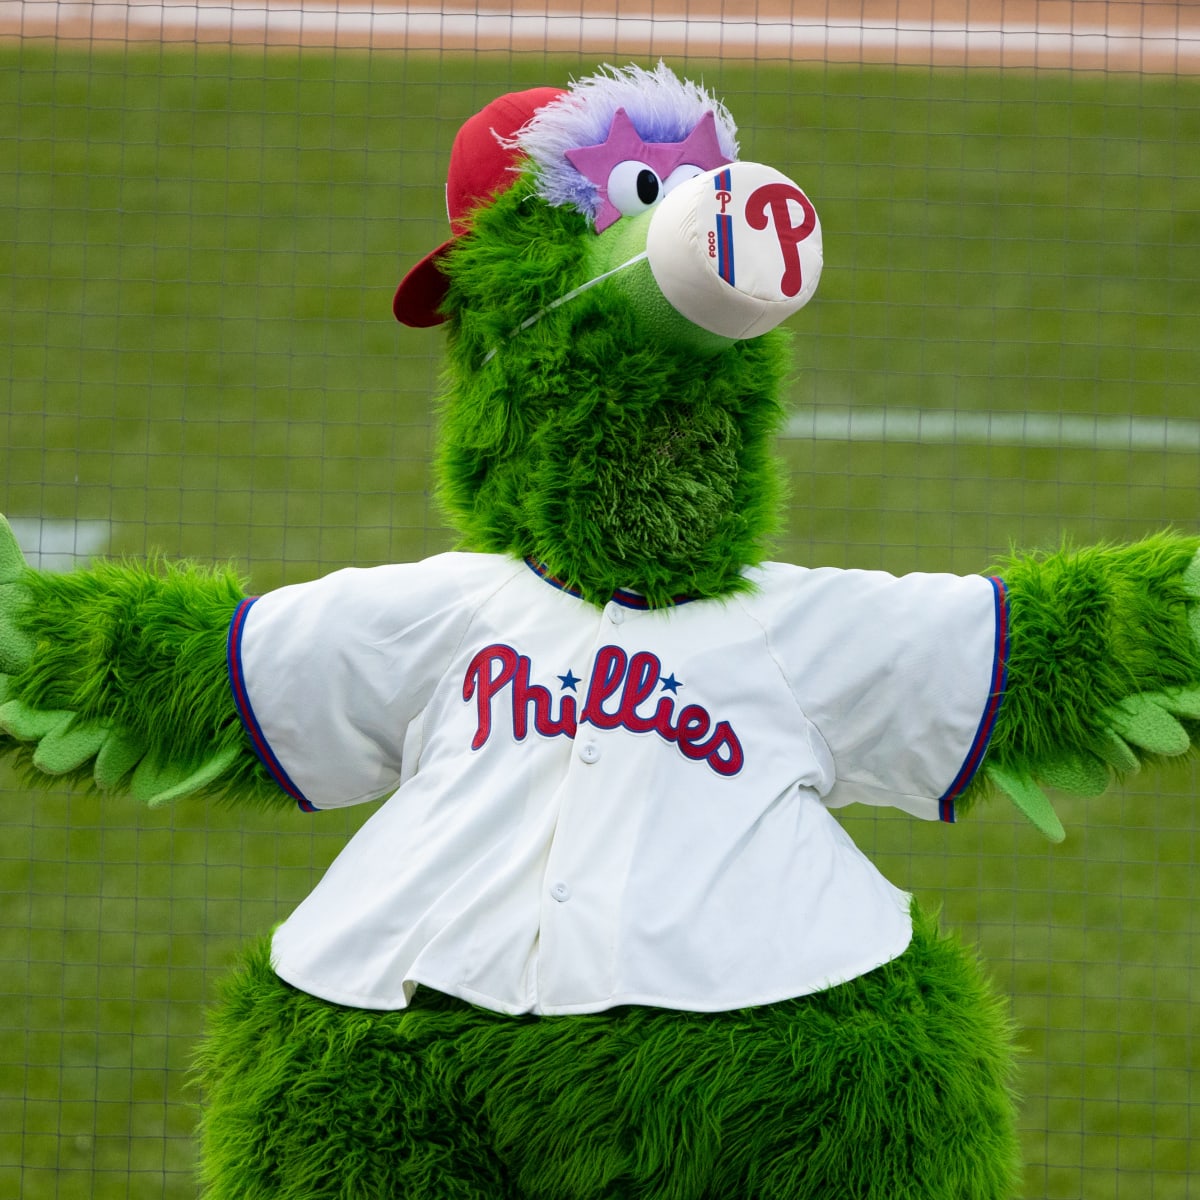 Woman sues Phanatic, claims Philadelphia Phillies mascot injured